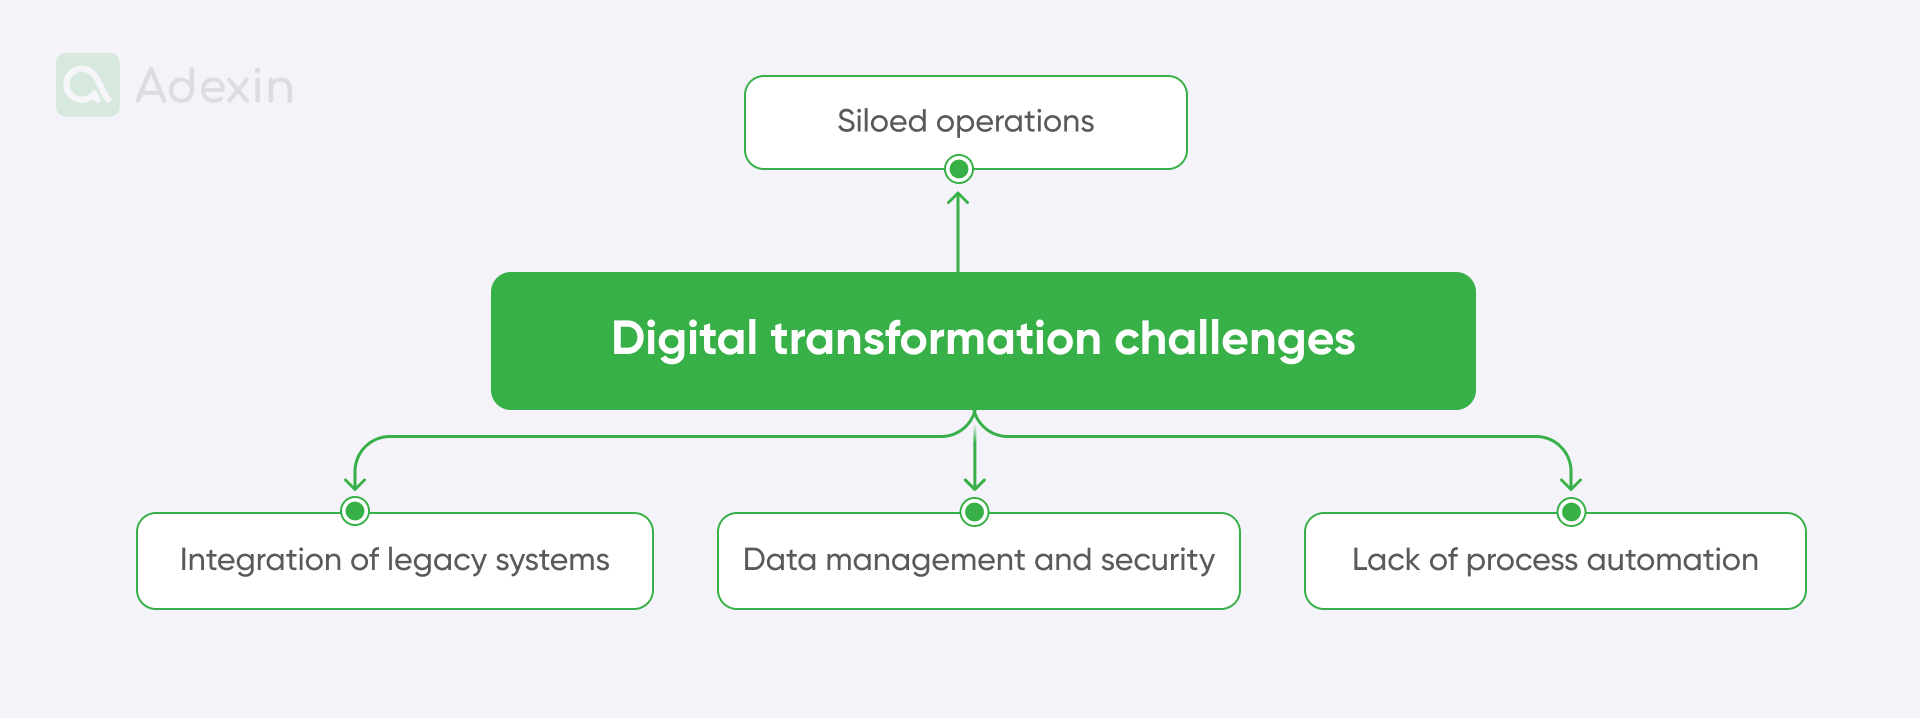 Elements of digital transformation challenges